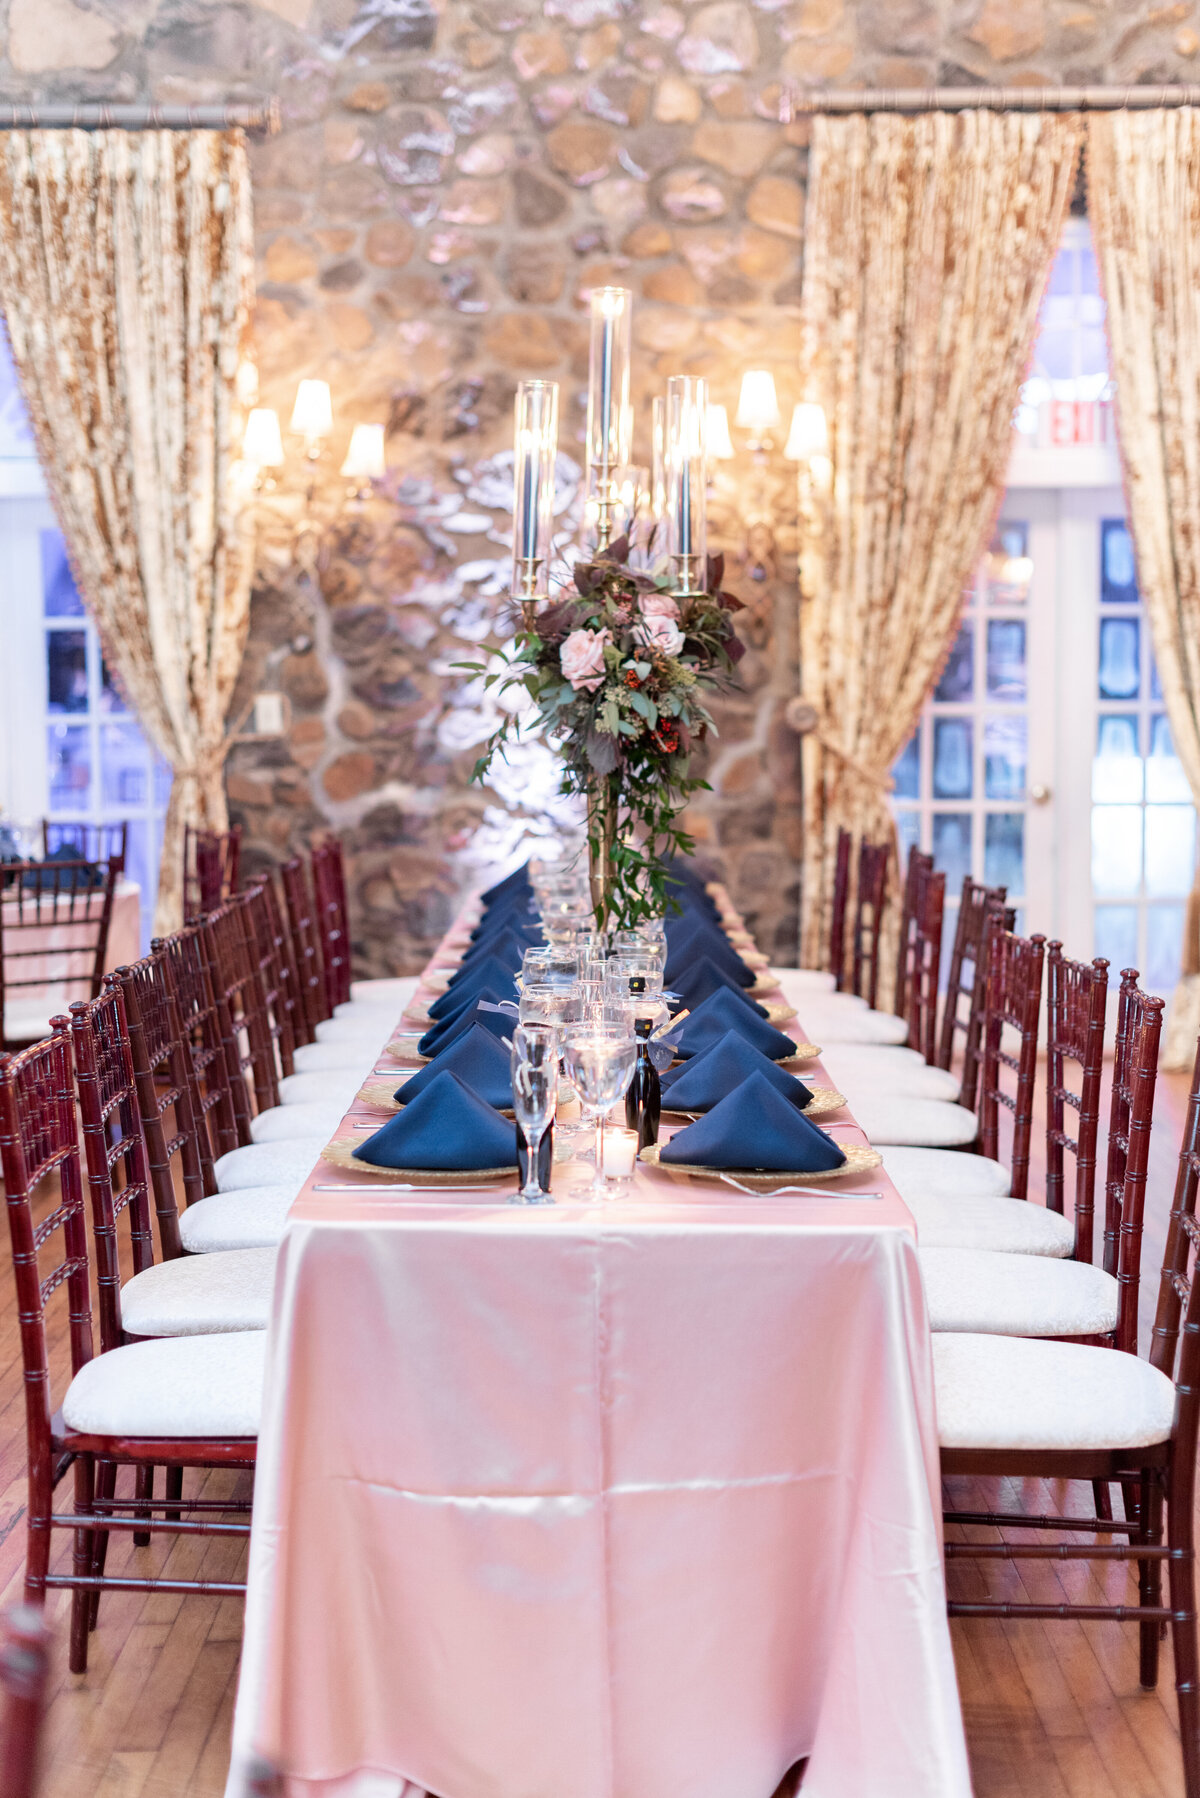 Poplar Springs manor reception details on luxury Virginia wedding day